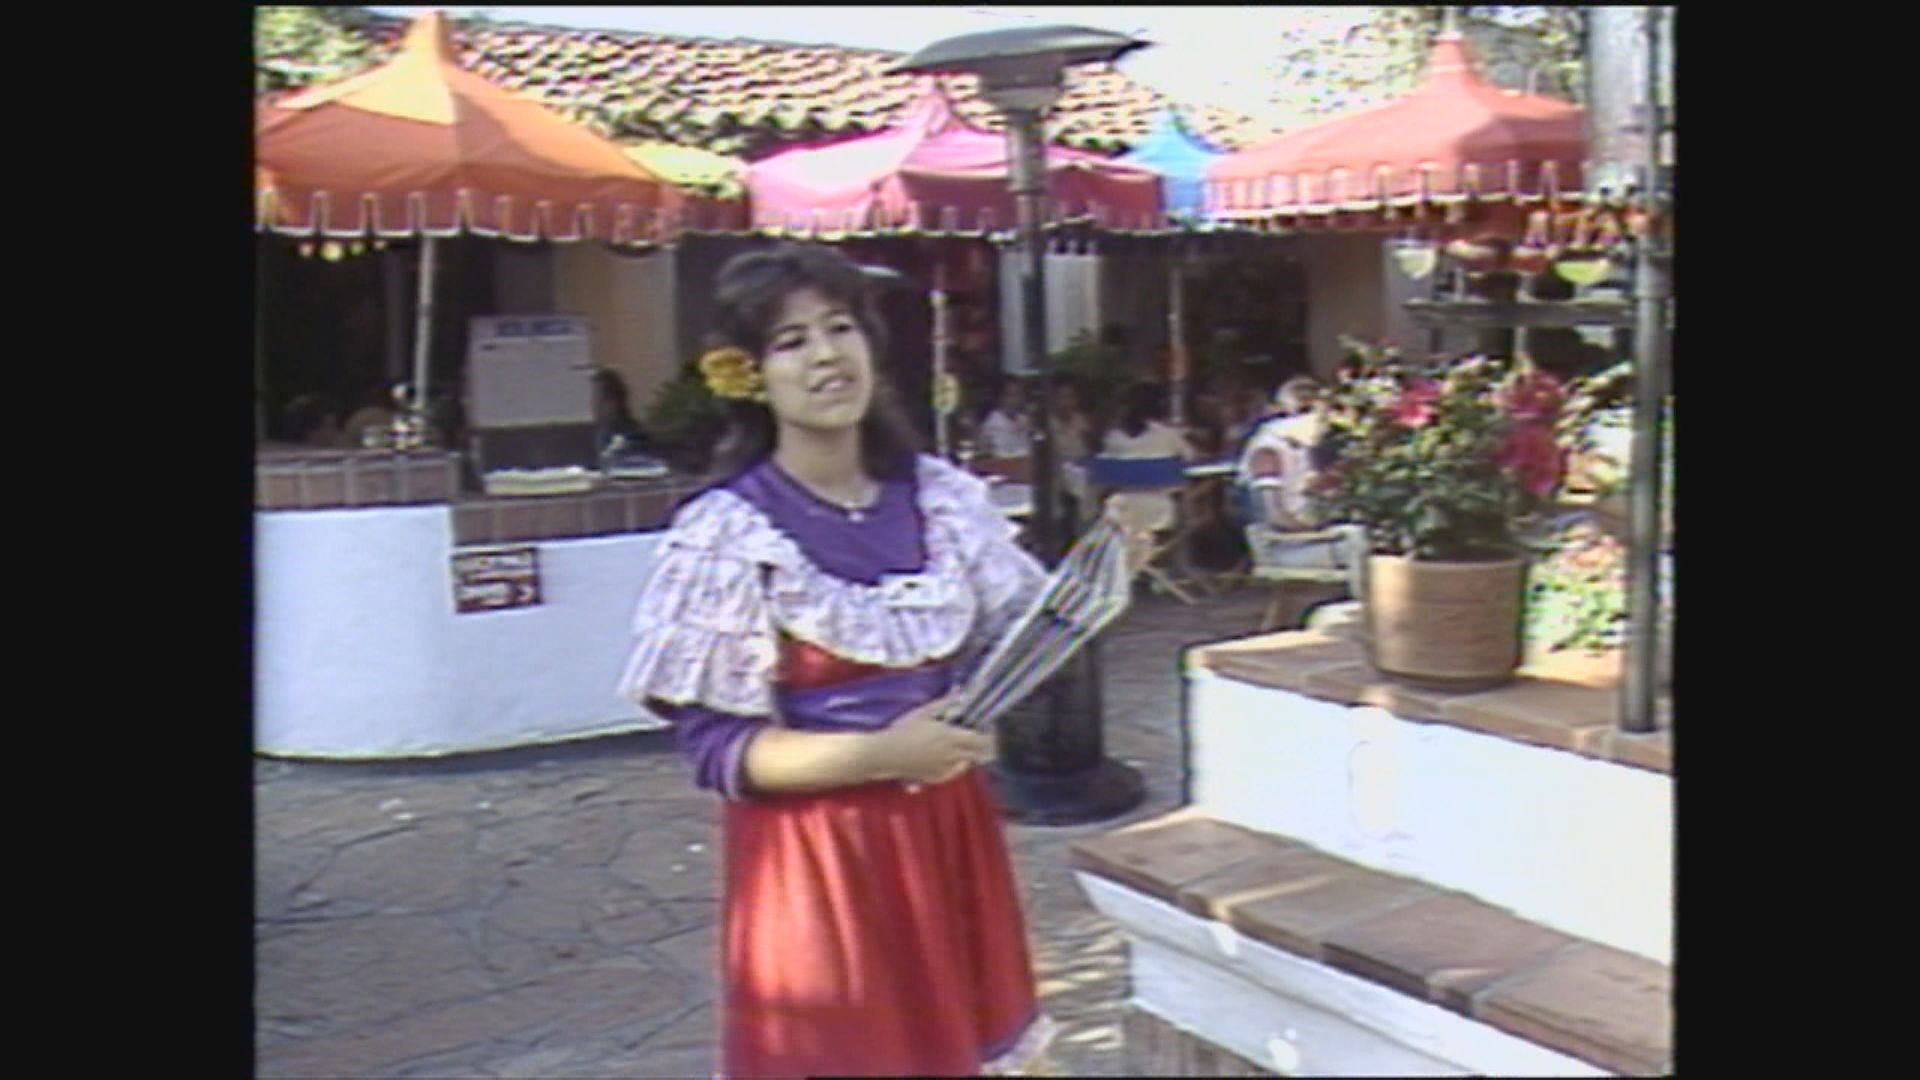 Casa de Pico Mexican Restaurant in Old Town 1986